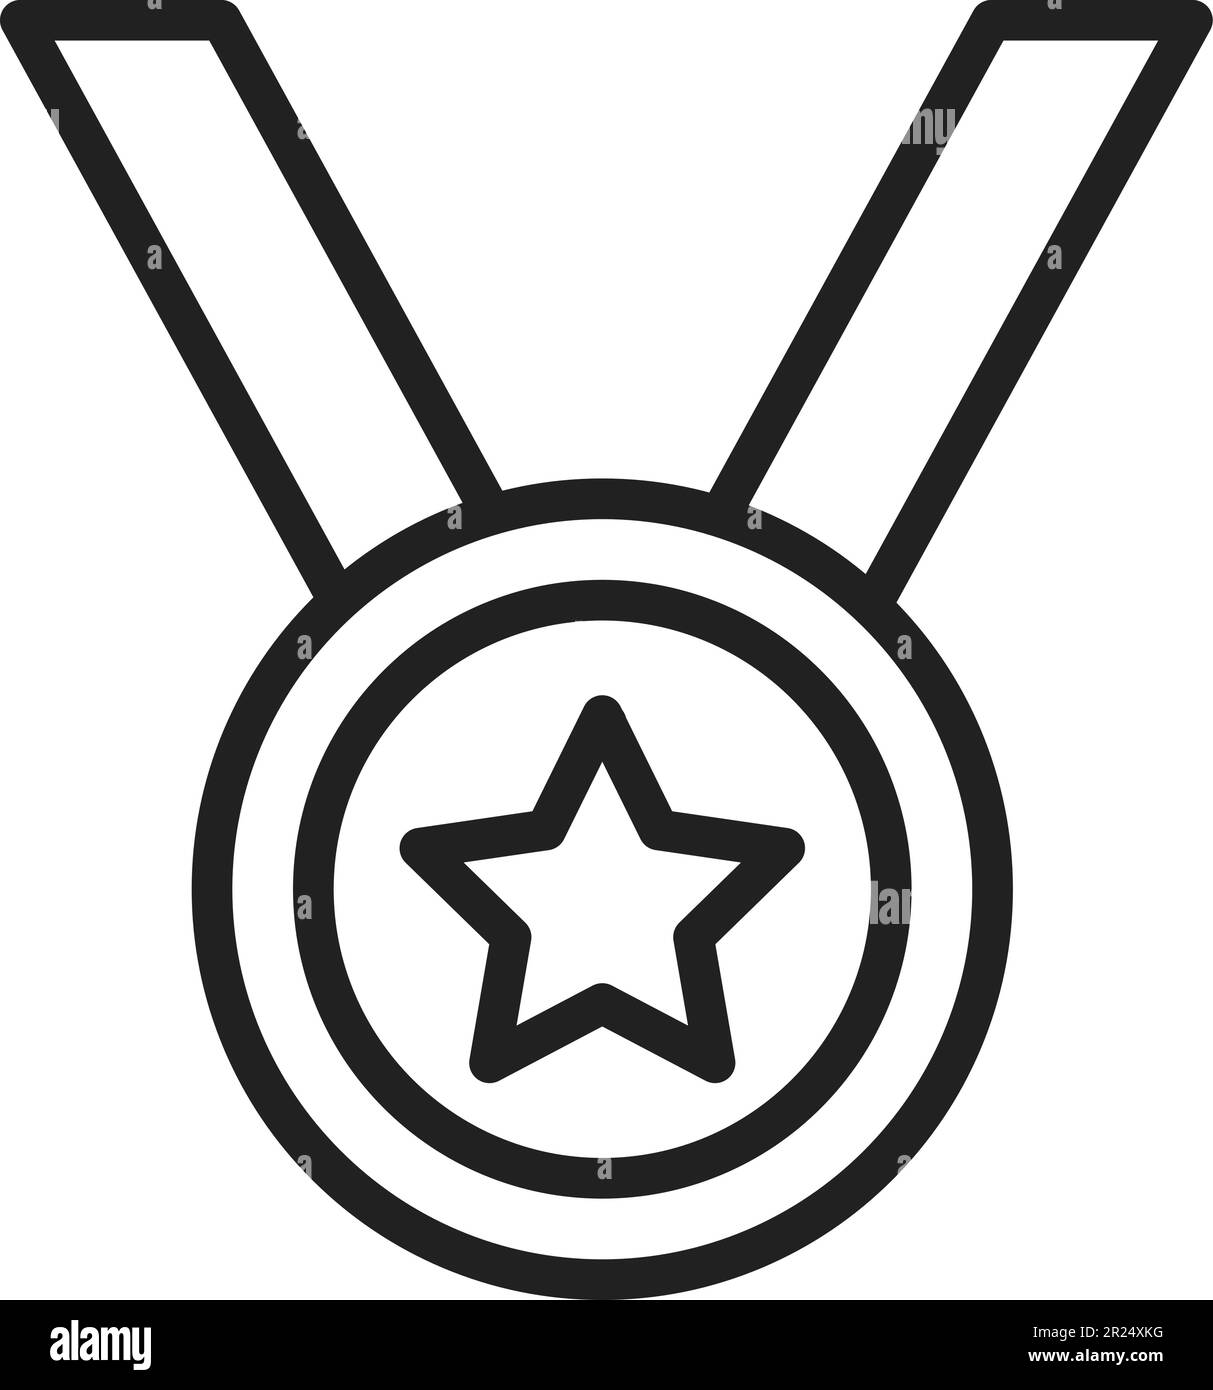 Medal icon vector image. Stock Vector